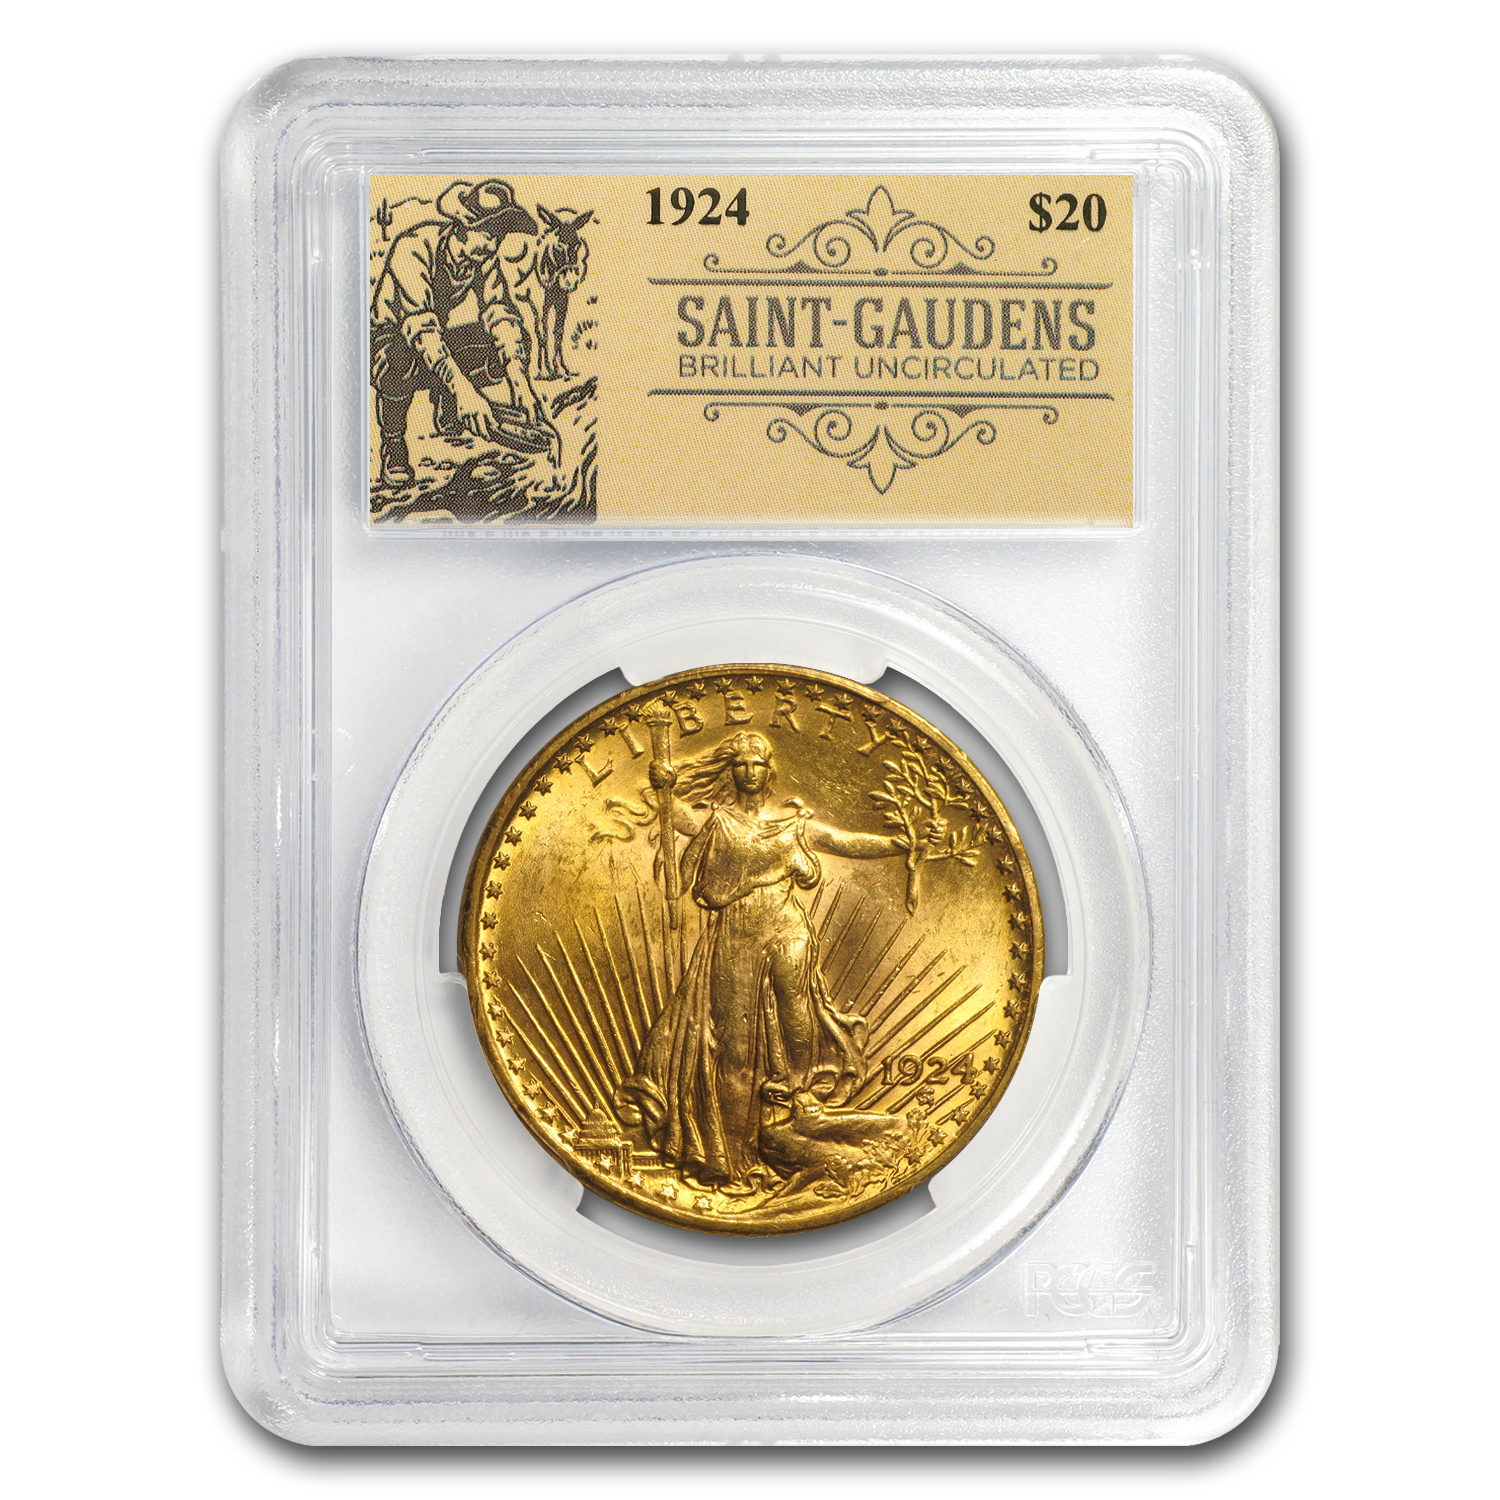 7-Coin $20 Saint-Gaudens Double Eagle Set BU PCGS (Prospector) - SKU#151071 | eBay